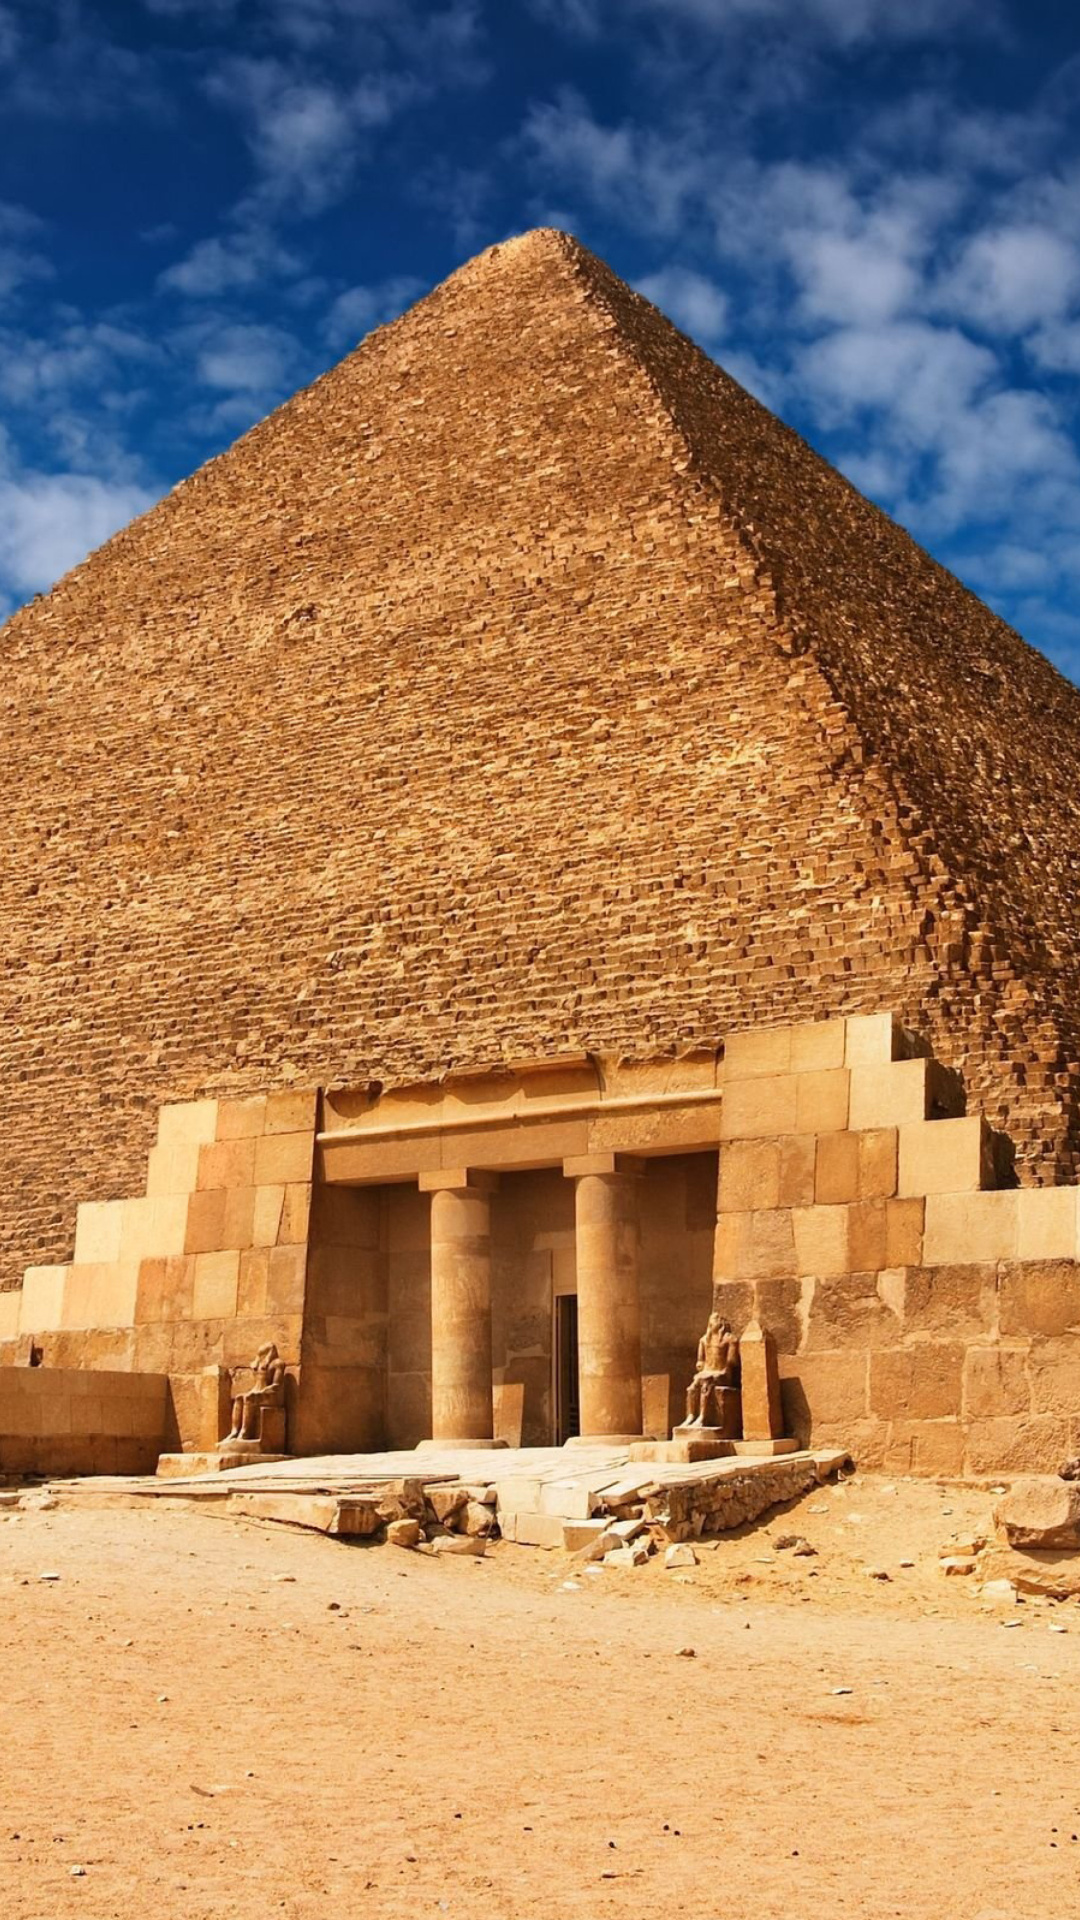 Обои Great Pyramid of Giza in Egypt 1080x1920